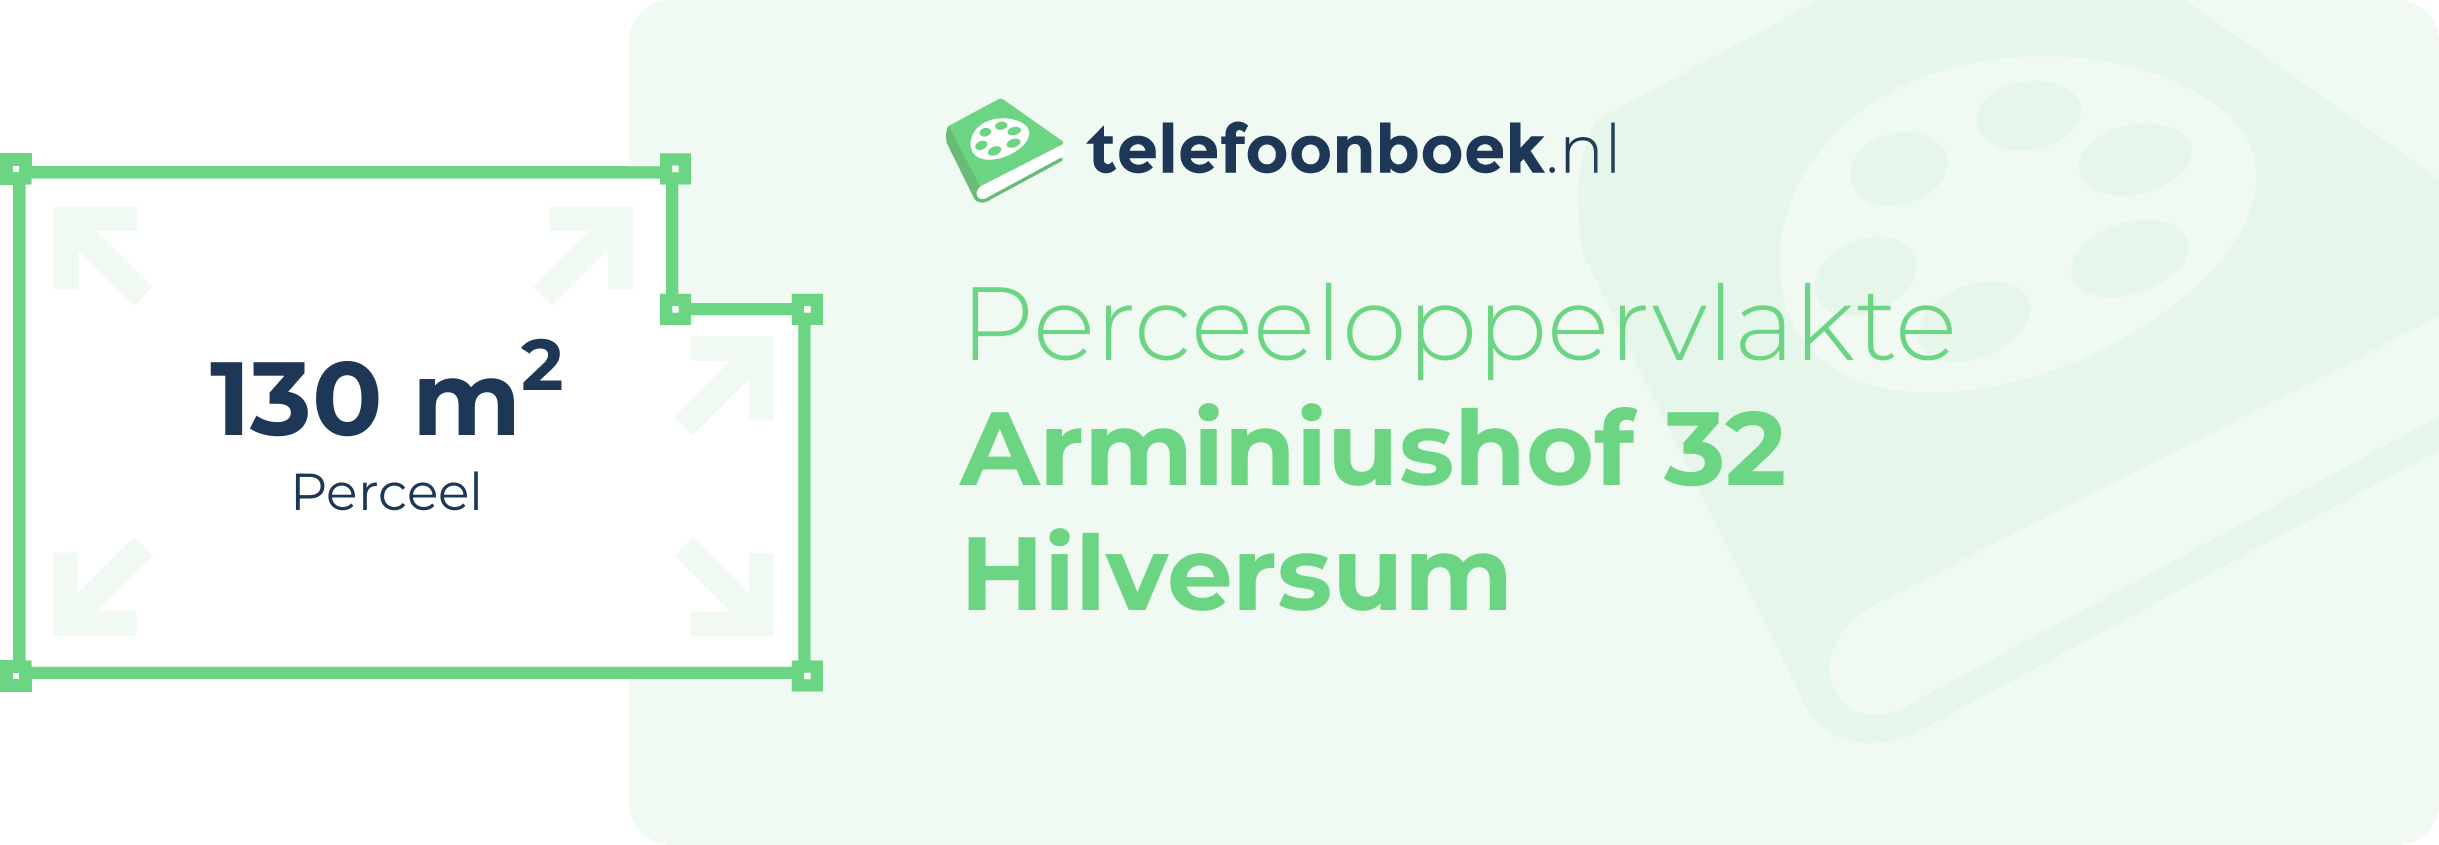 Perceeloppervlakte Arminiushof 32 Hilversum